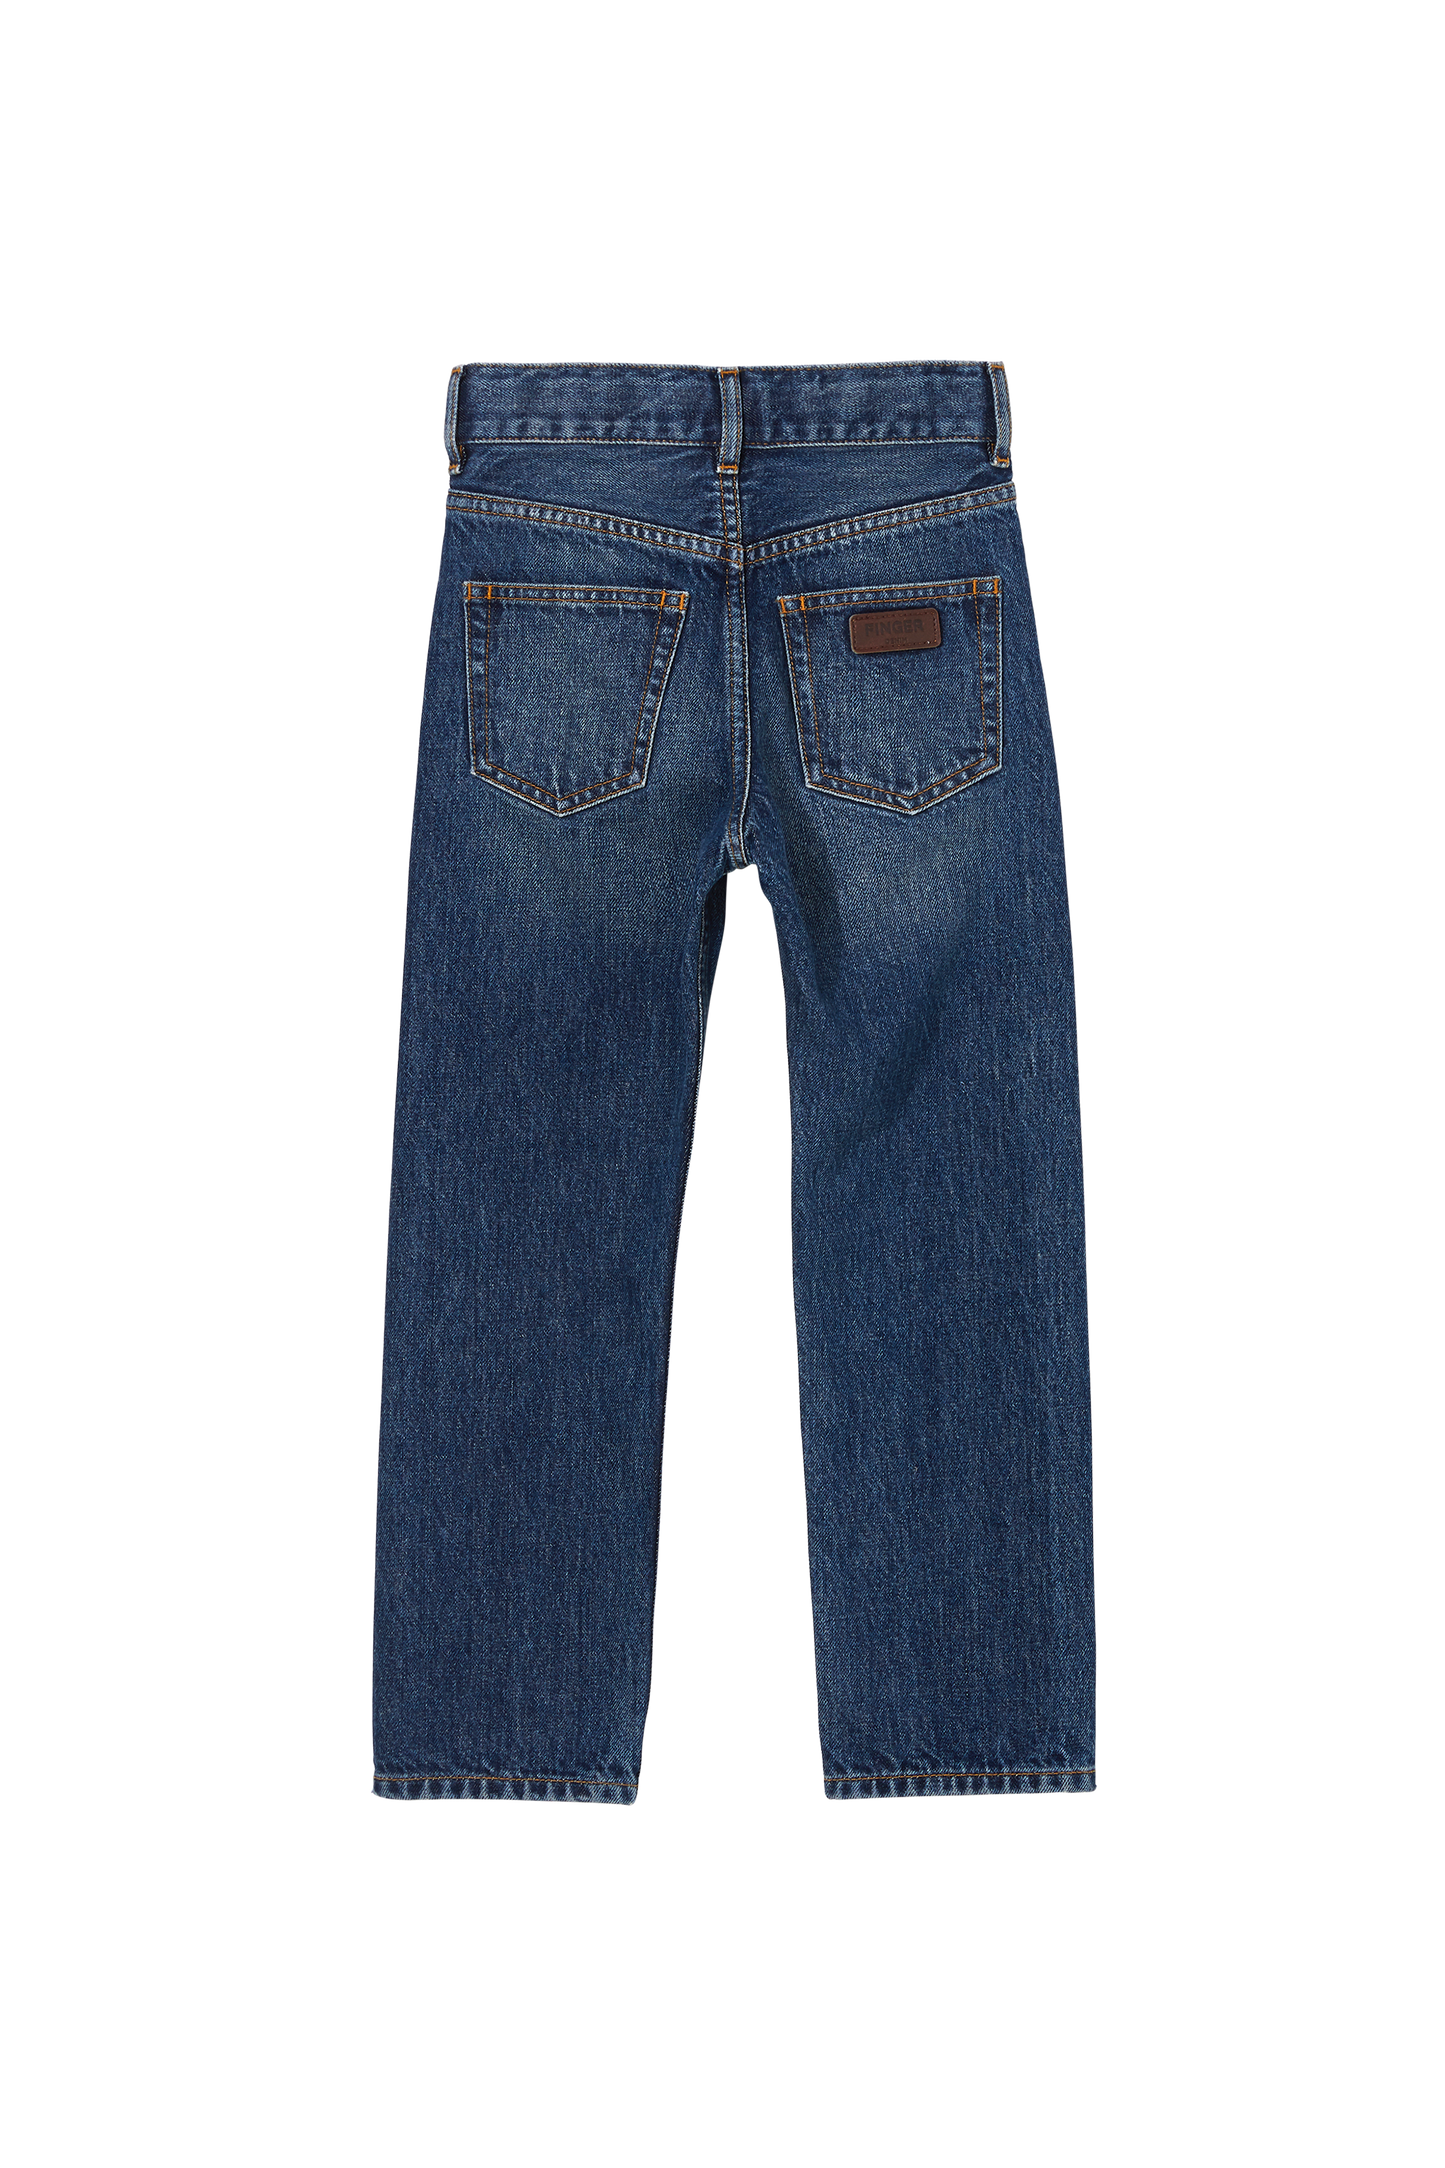 NORTON Authentic Blue - 5-Pocket Straight Fit Jeans